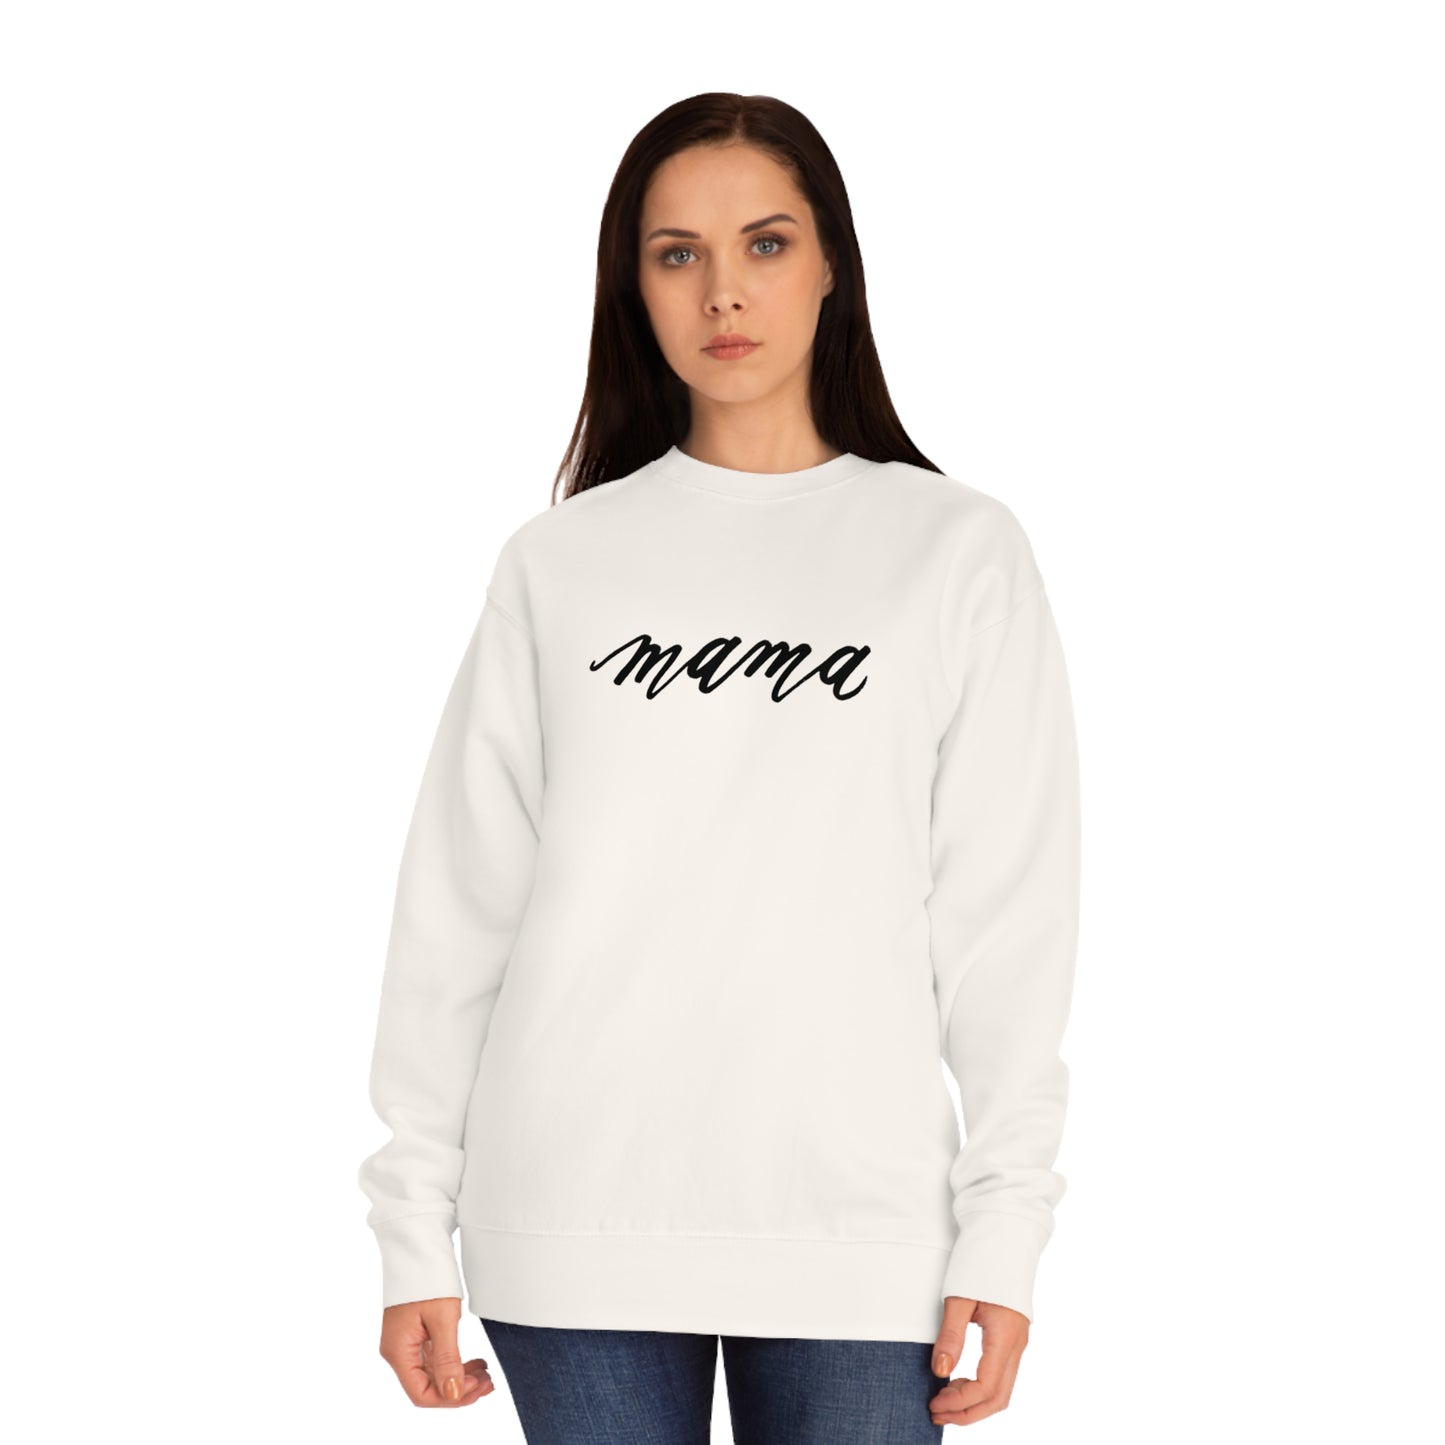 Script "Mama" Calligraphy Printed Everyday Unisex Crew Sweatshirt